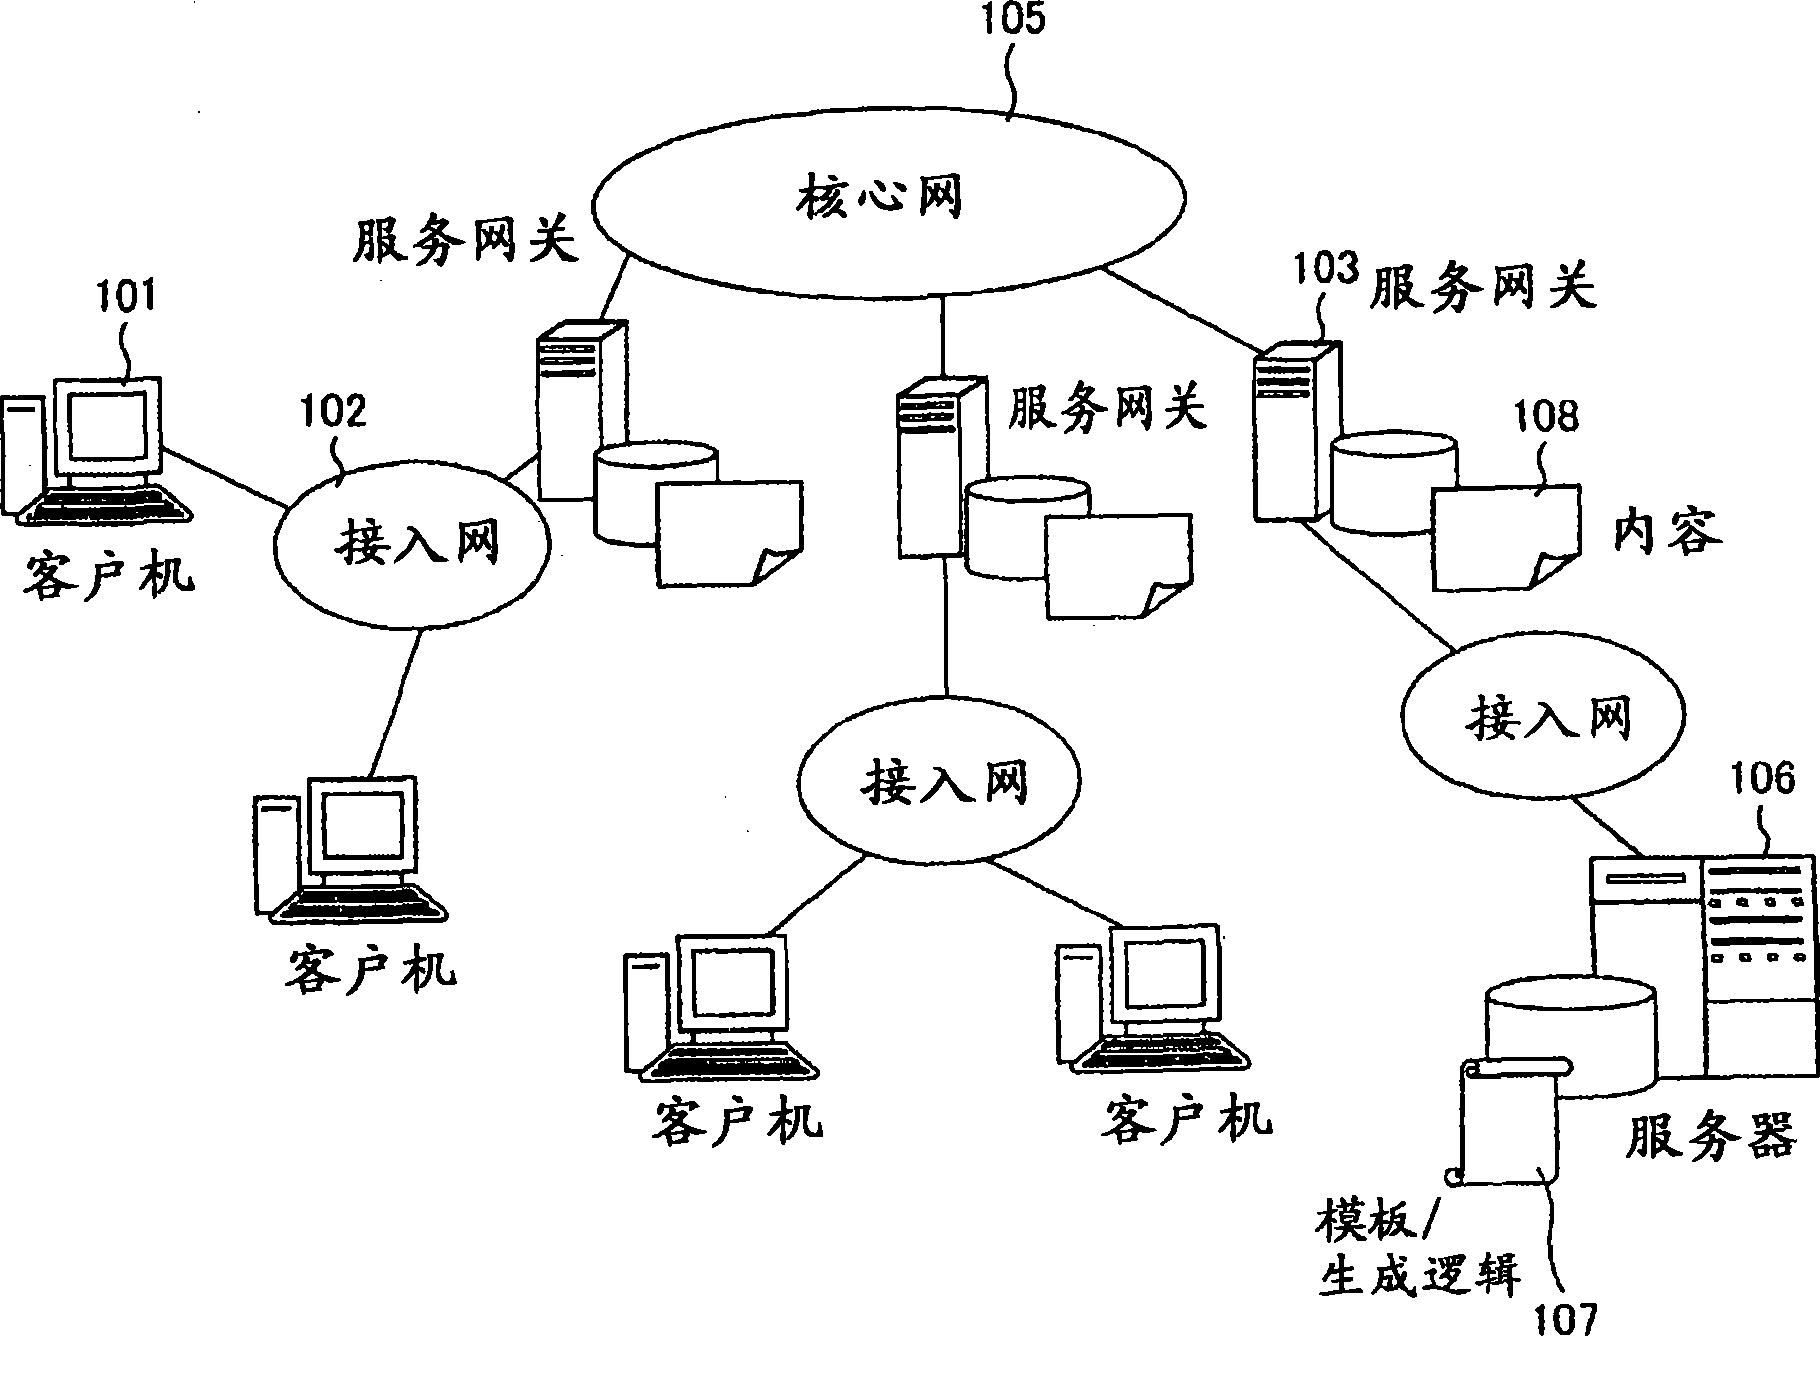 Service providing system, gateway, and server